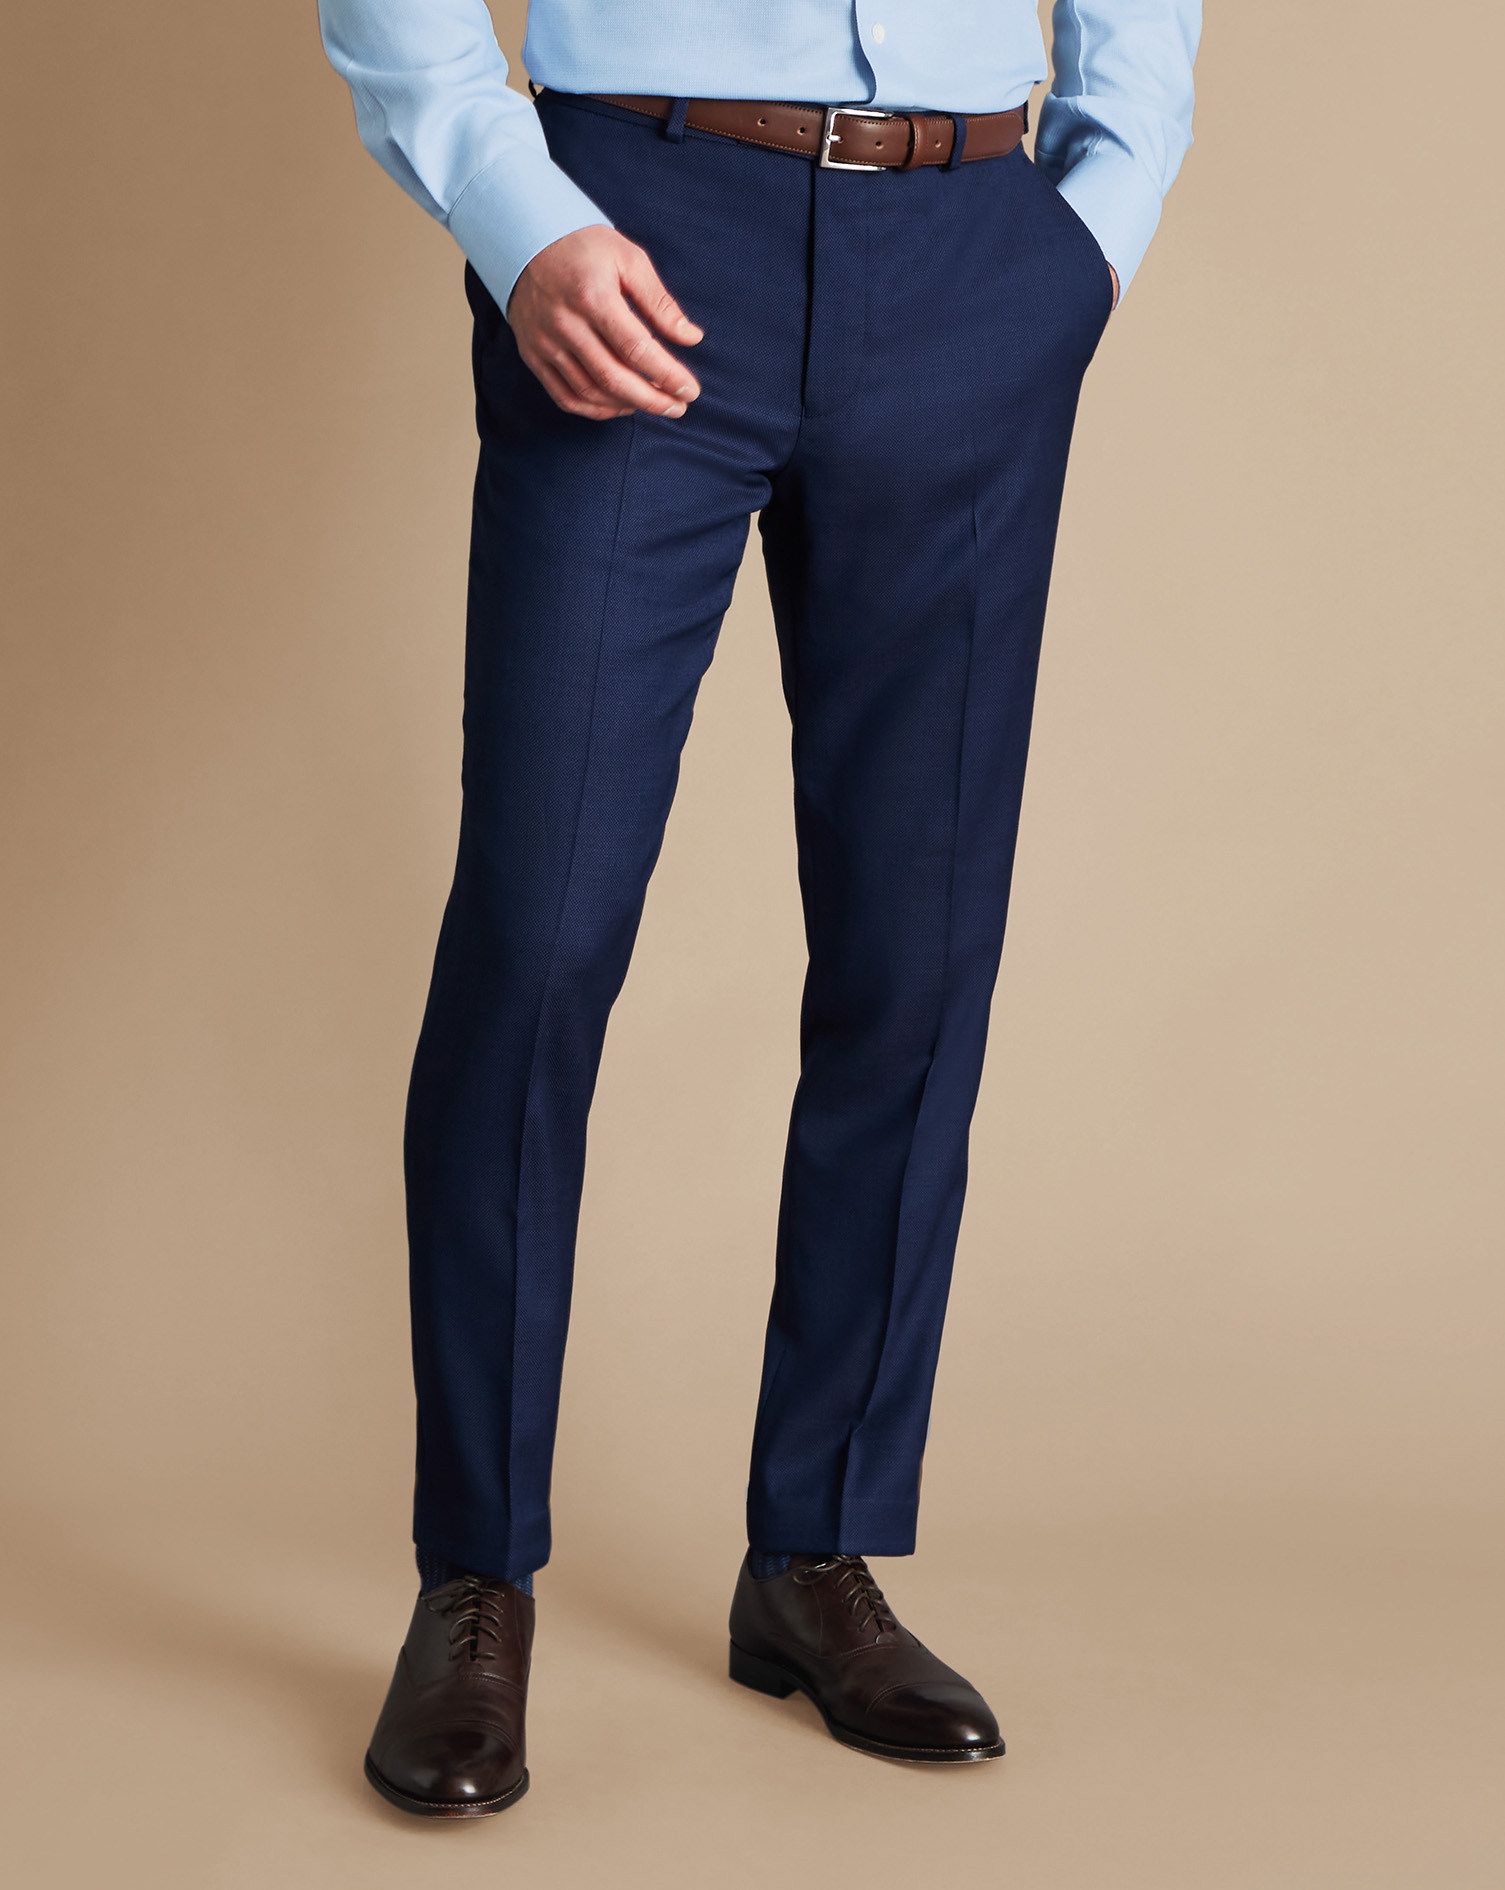 Men's Charles Tyrwhitt Ultimate Performance Birdseye Suit Trousers - Indigo Blue Size 38/32 Wool
